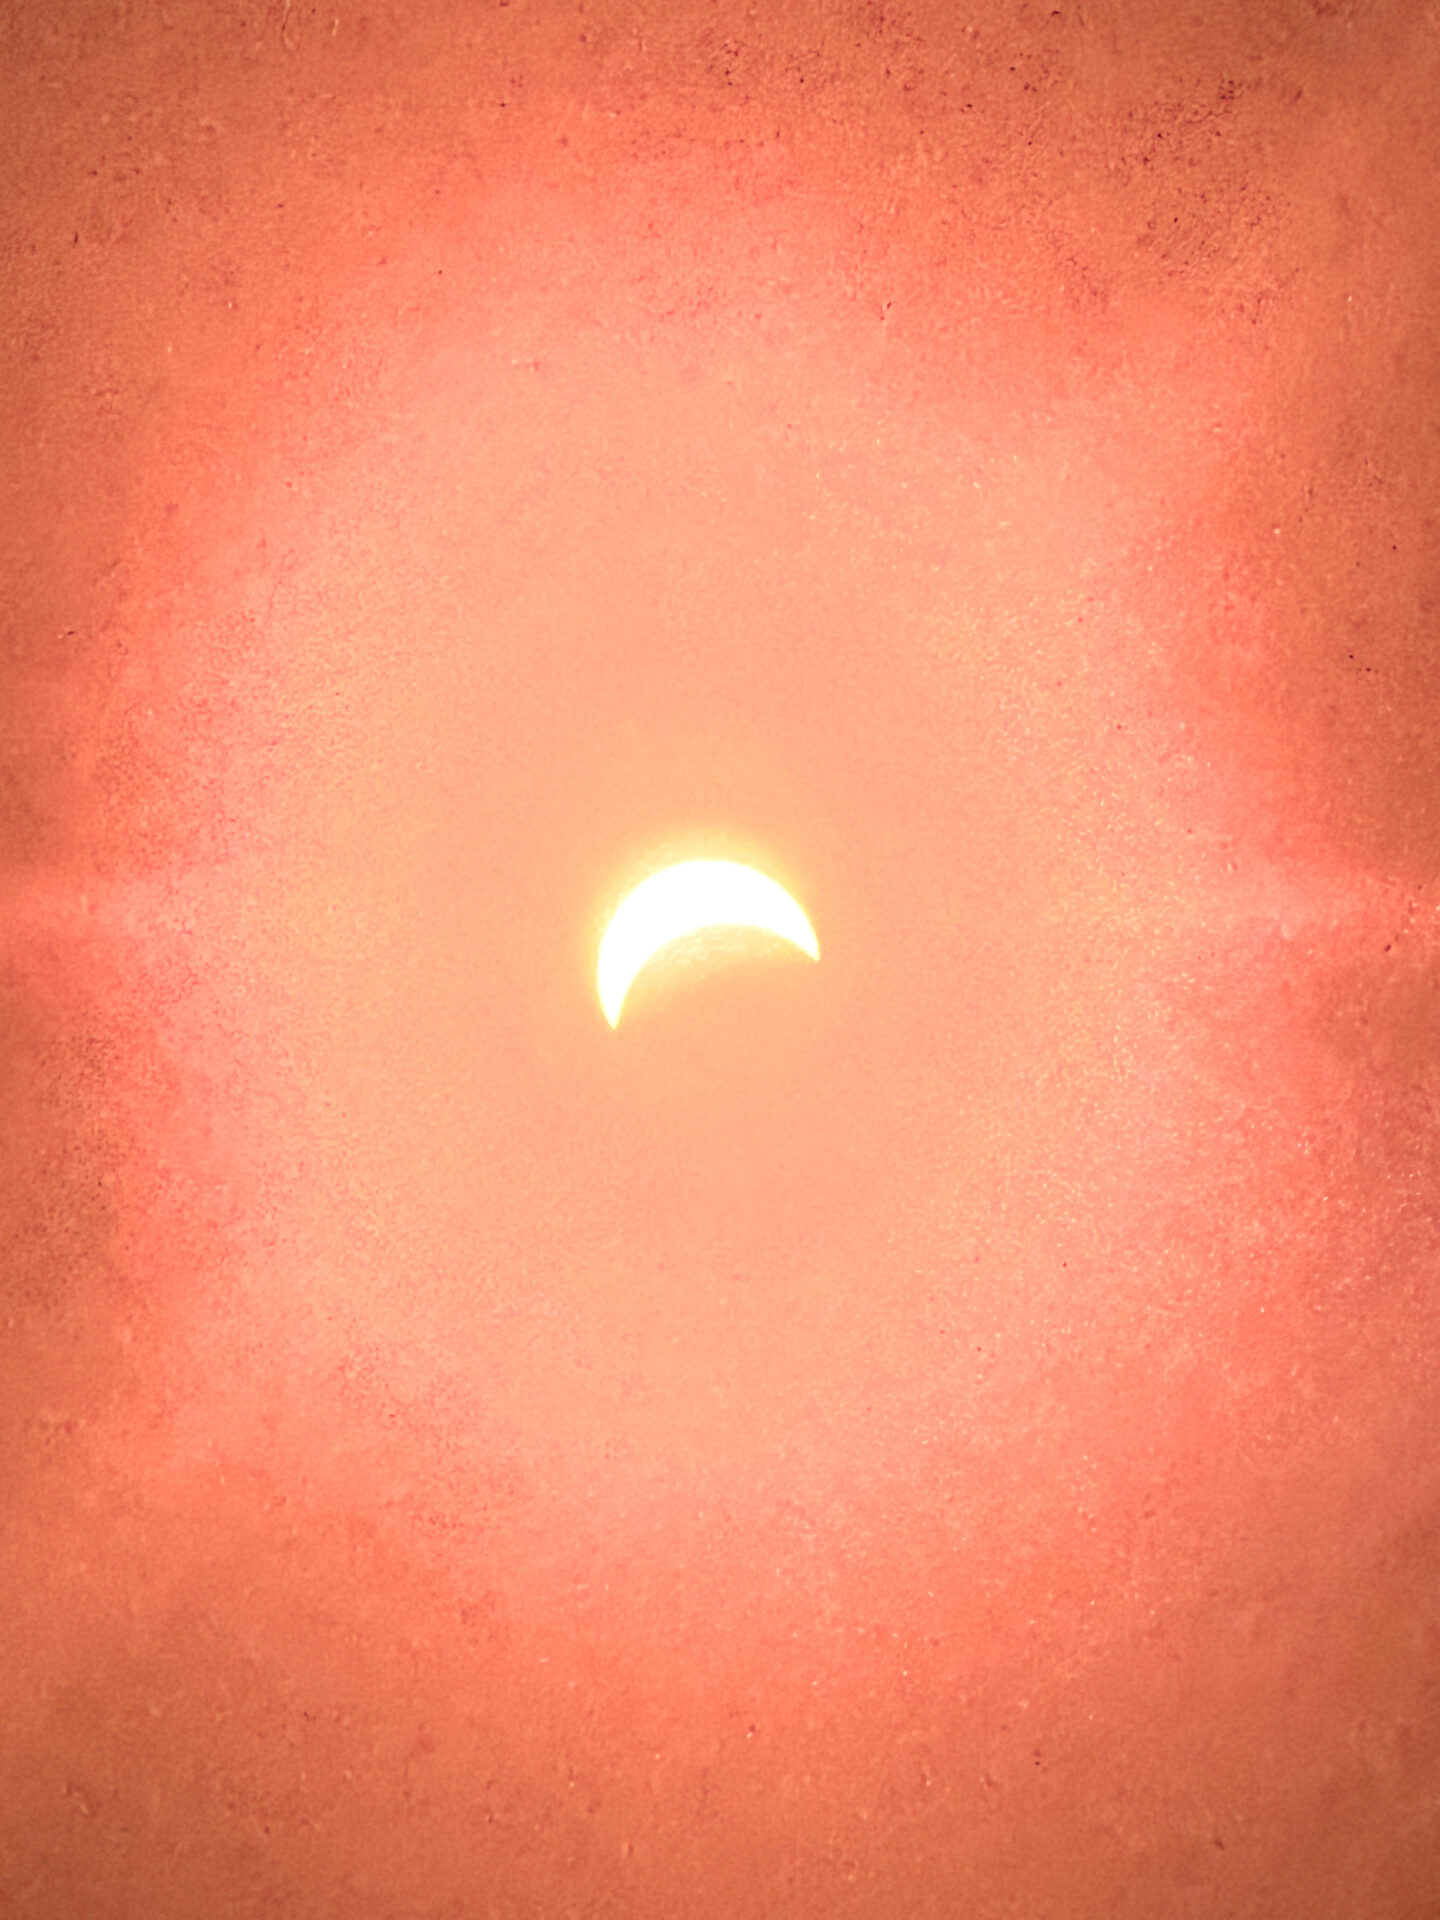 solar eclipse shot